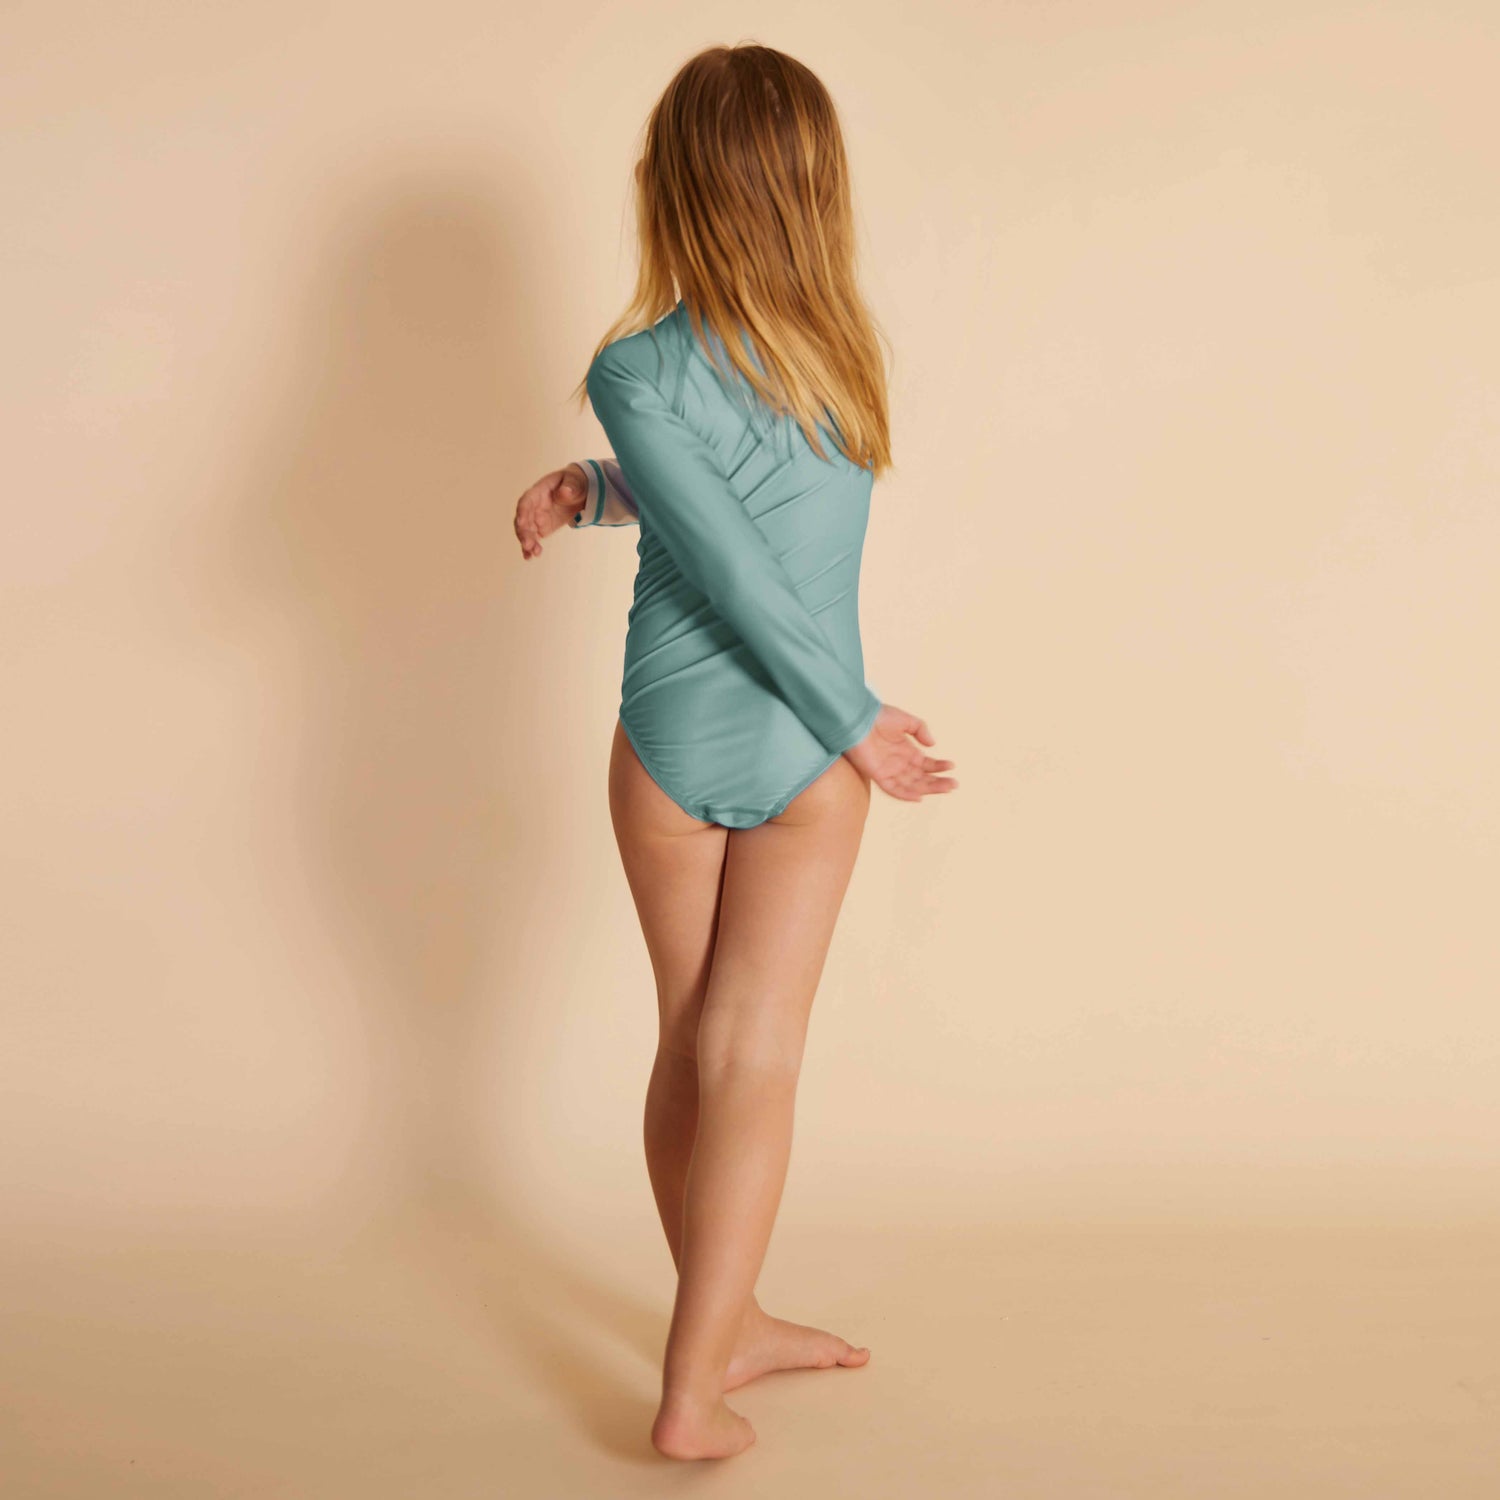 Malie Matcha UV-Swimsuit